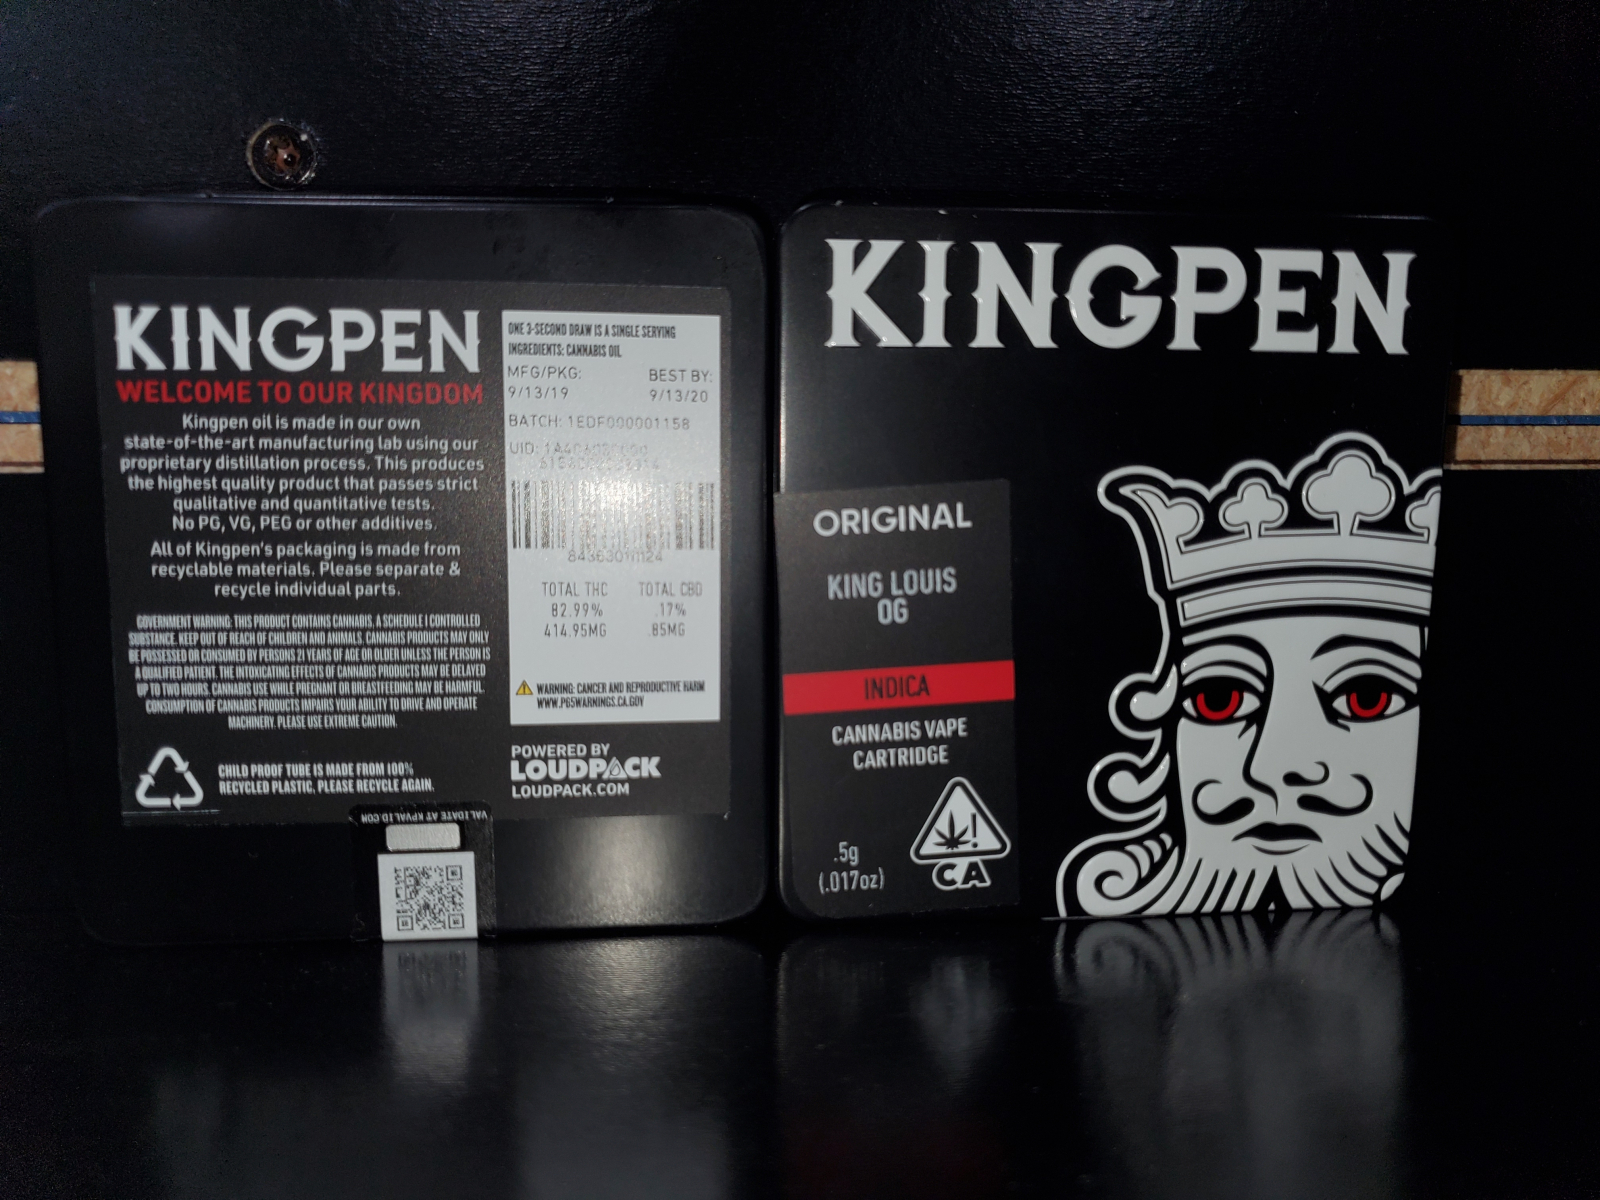 (King Pen) King Louis OG .5g cartridge-indica 